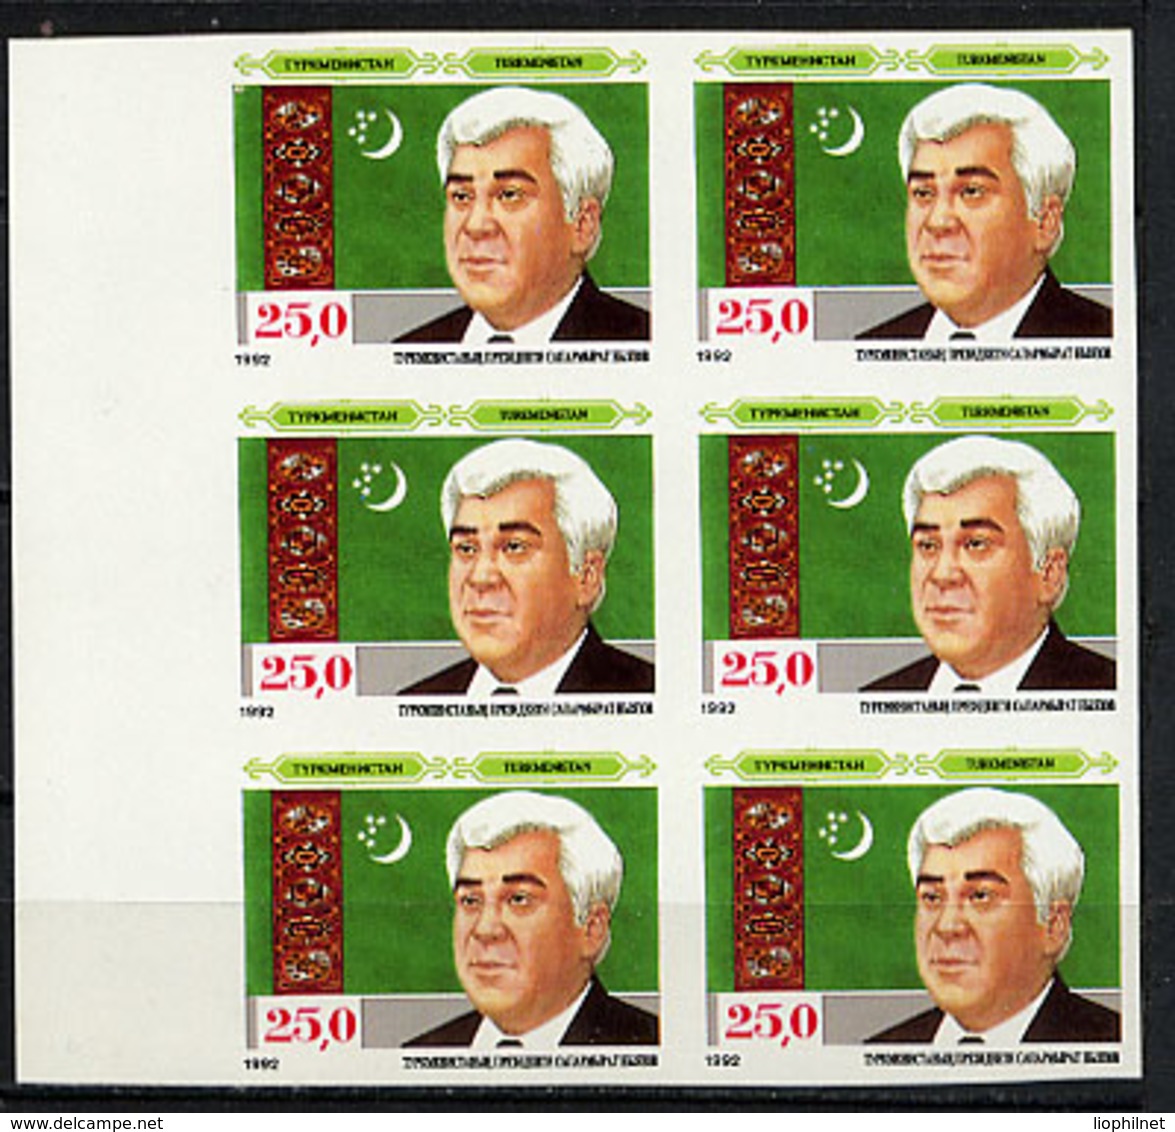 TURKMENISTAN 1992, Yvert 12, PRESIDENT NIYAZOV EFFIGIE DROITE, Bloc De 6 NON DENTELE IMPERFORATED, Neuf / Mint. R329x6 - Turkmenistan